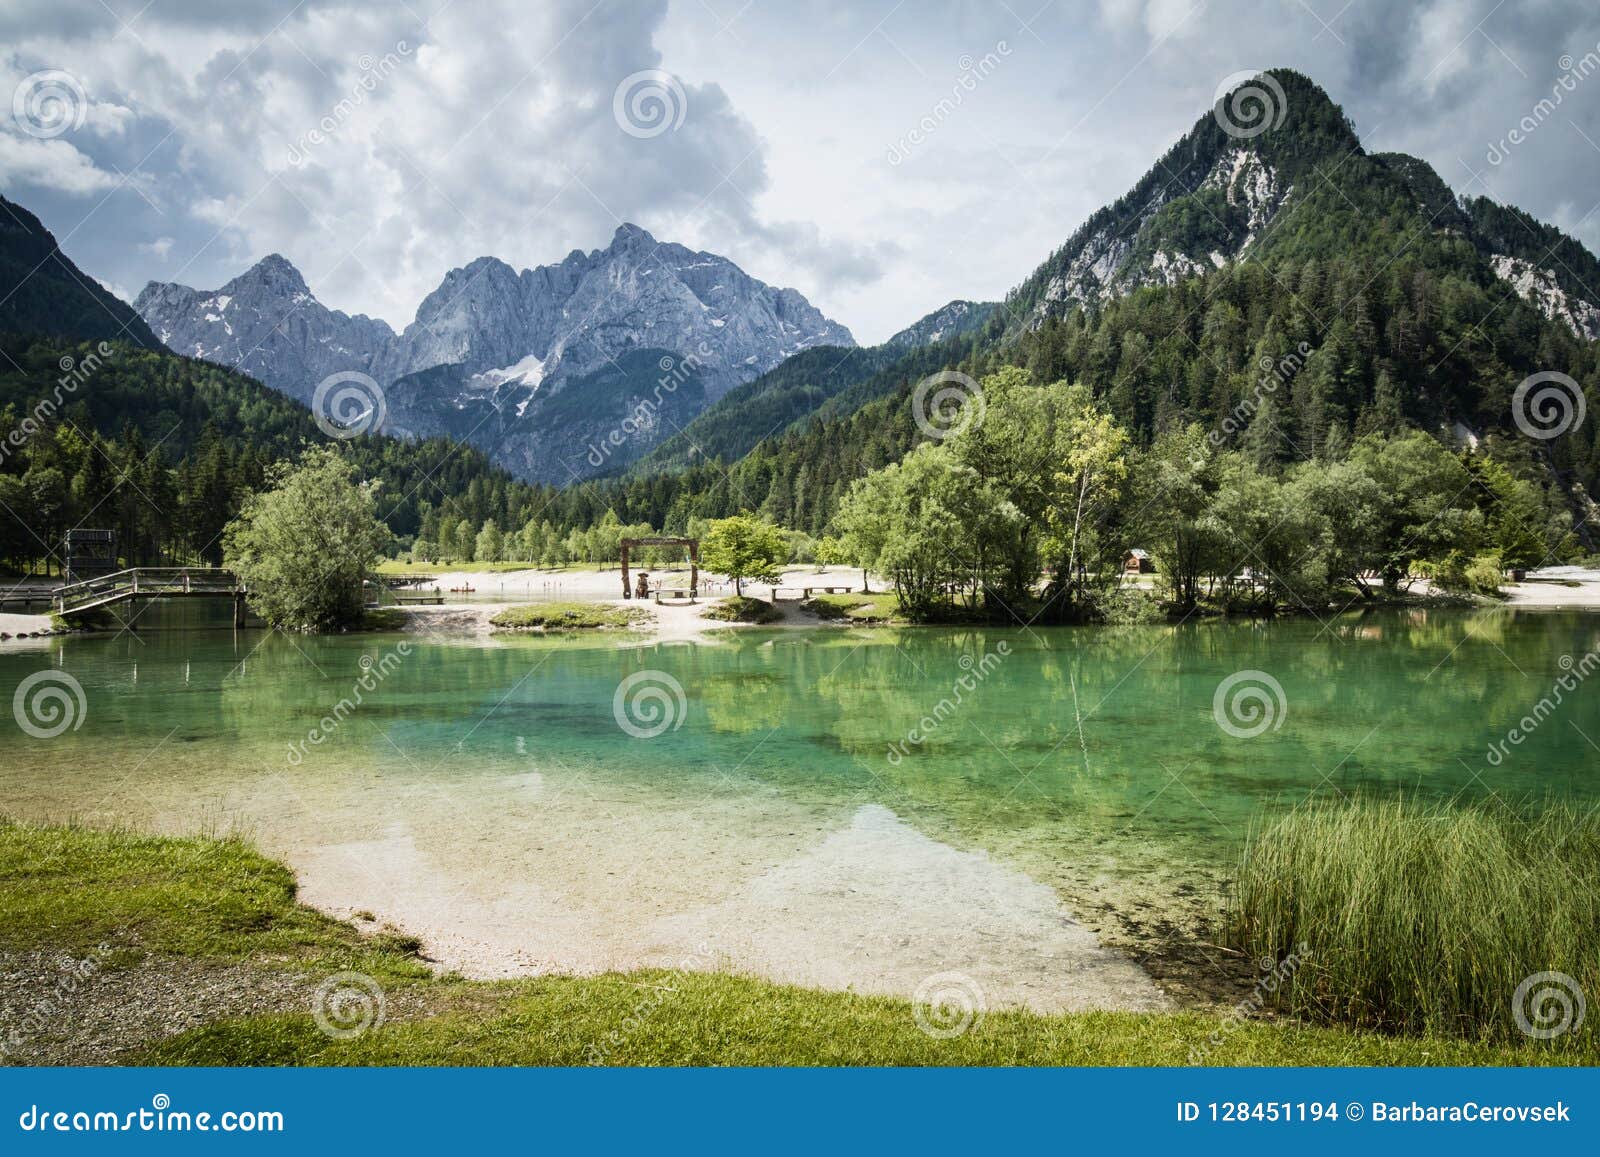 beautiful scenic lake jasna in summertime, kranjska gora, slovenia